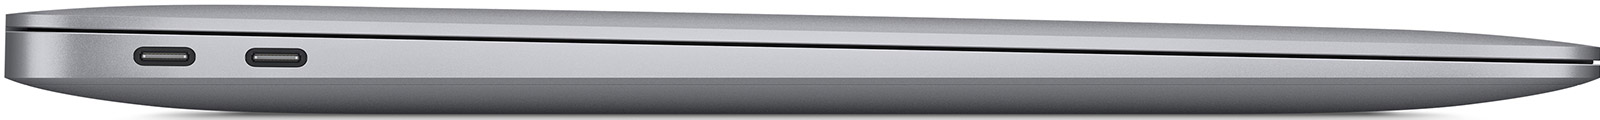 Apple-MacBook-Air-13-3-M1-8-Core-8-GB-256-GB-7-Core-Grafik-Space-Grau-US-Amer-05.jpg